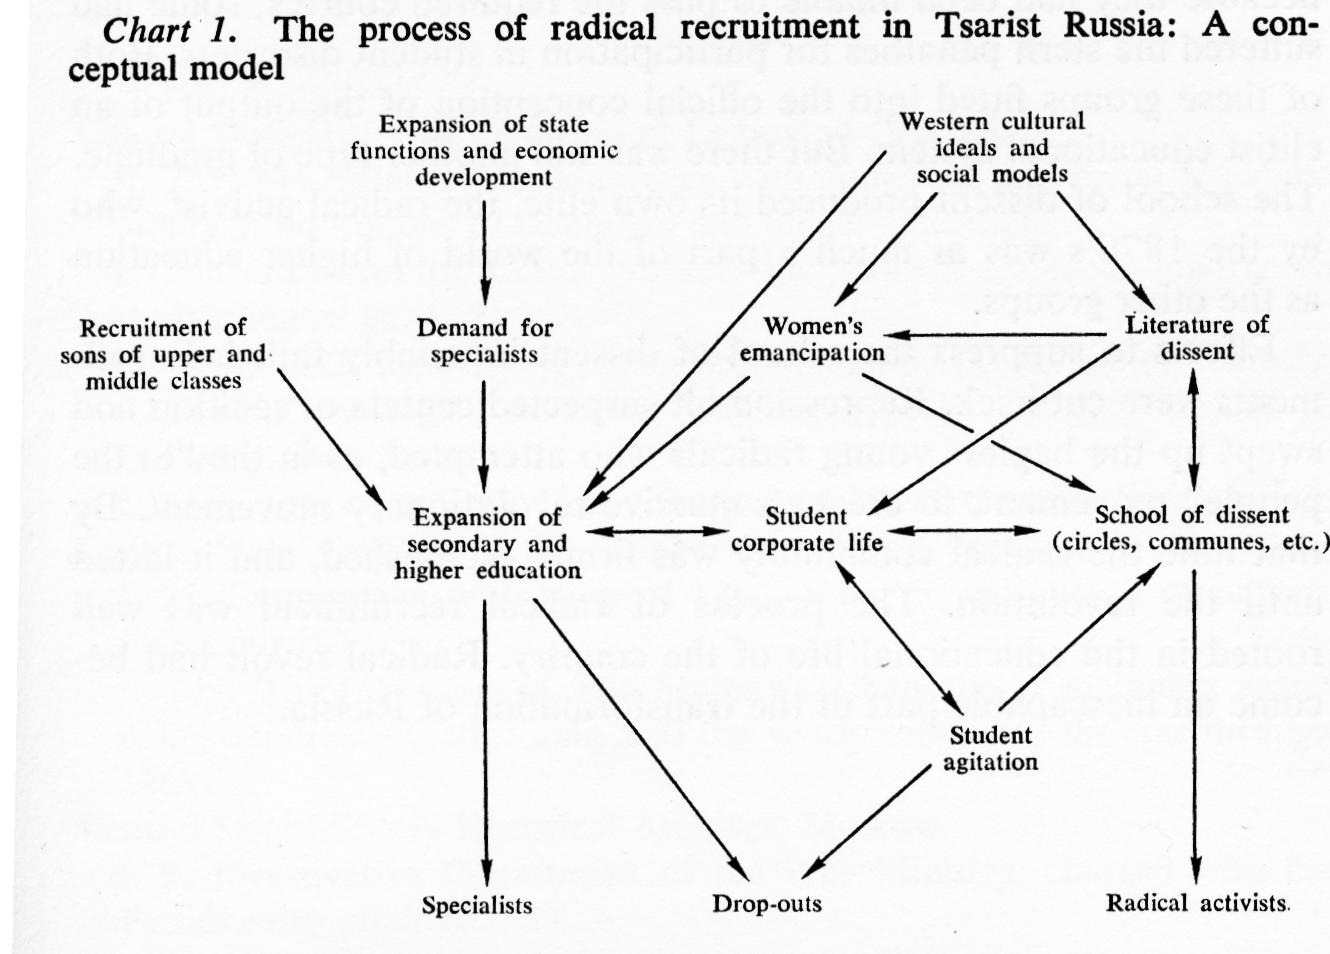 19th Century Reform Movements Chart